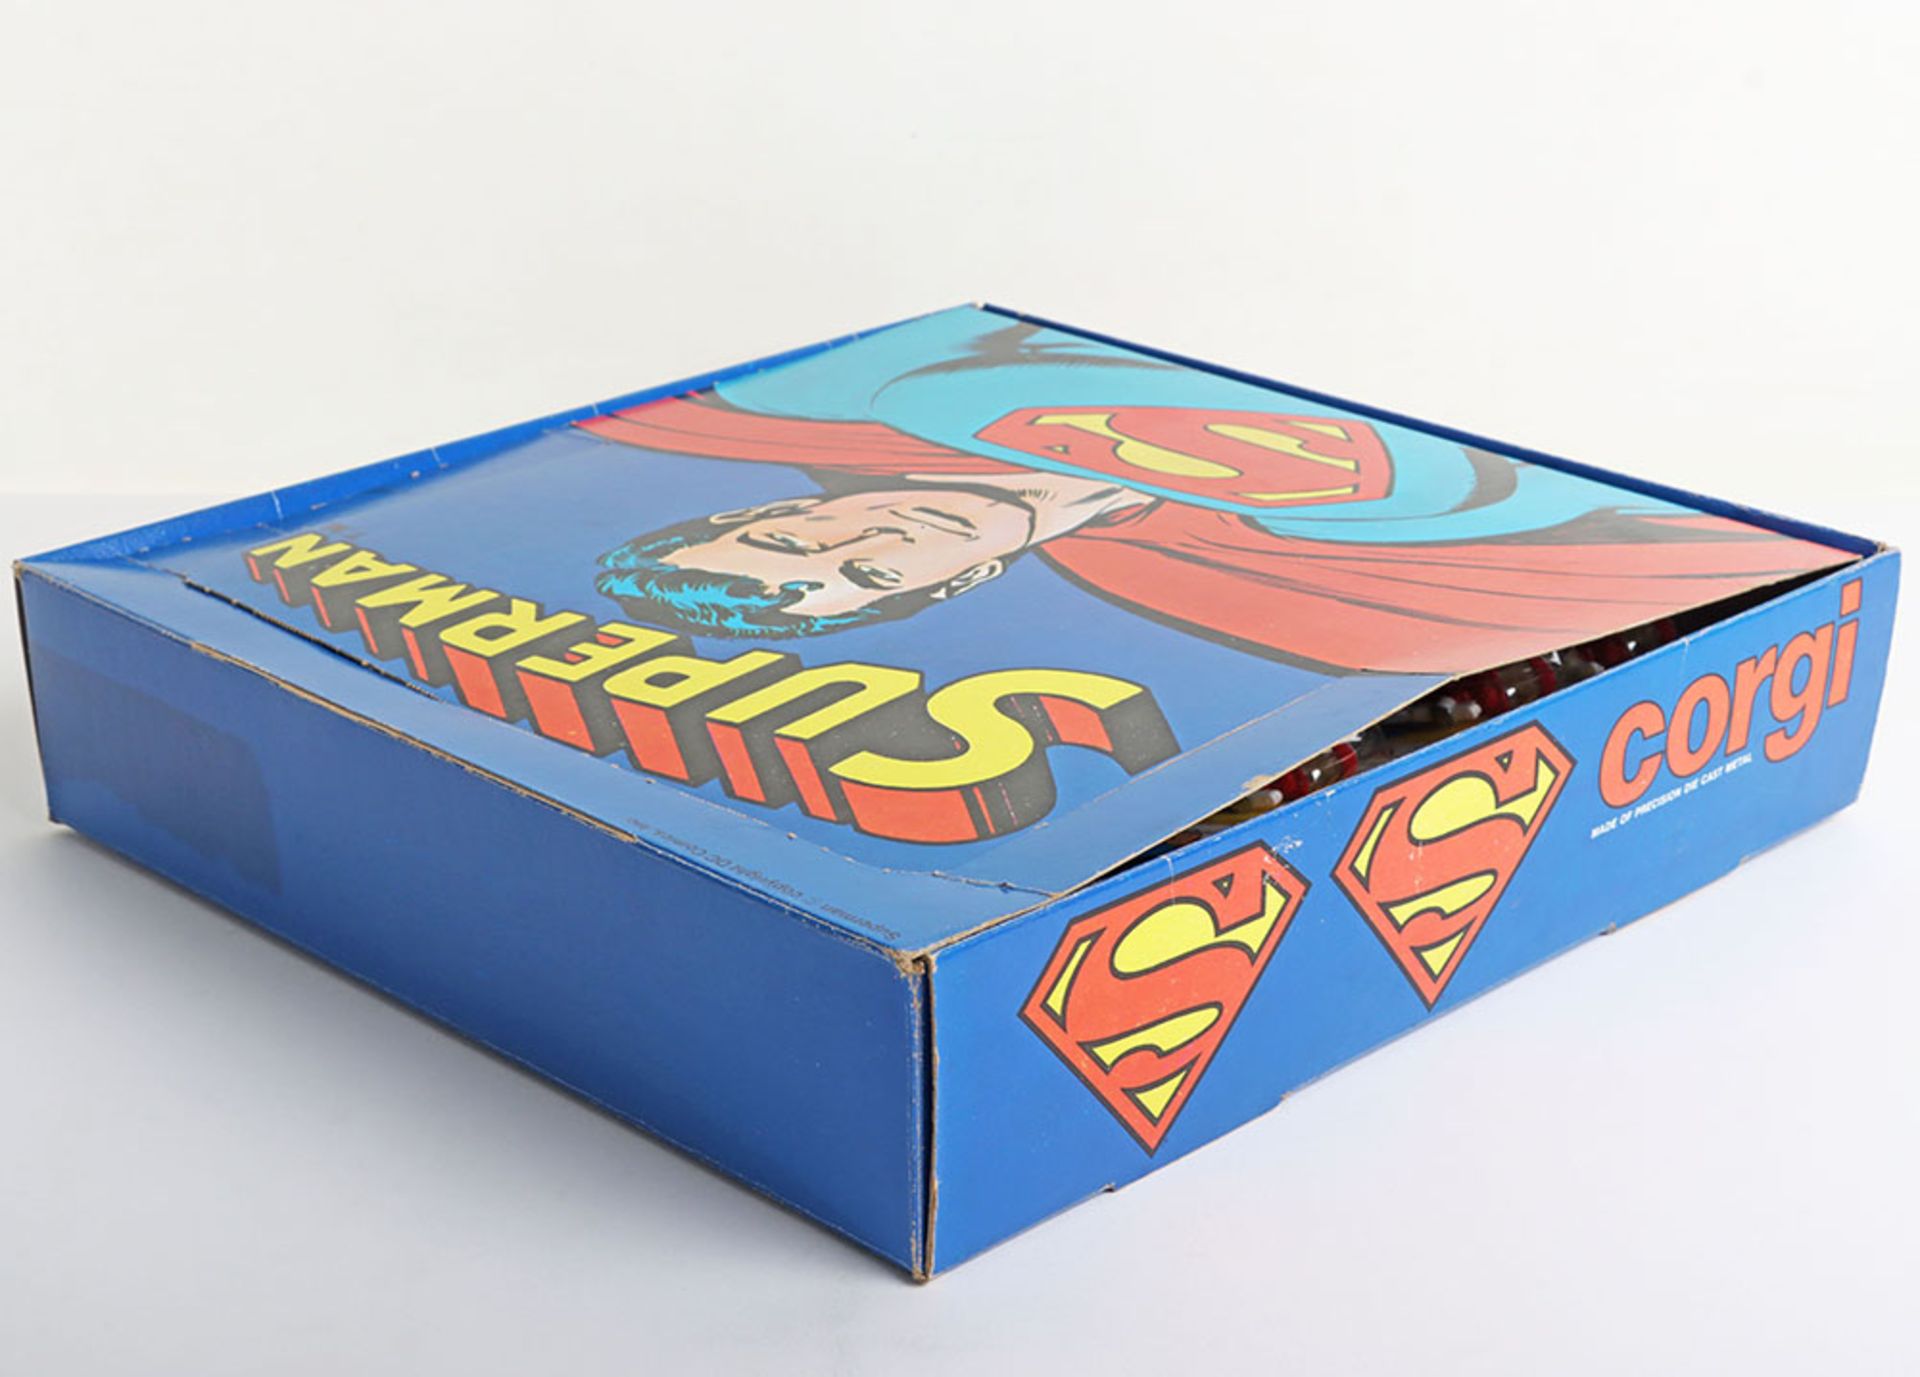 Very Scarce Reeves International USA issue Corgi Juniors Superman Shop Counter Display Trade Box - Image 3 of 5